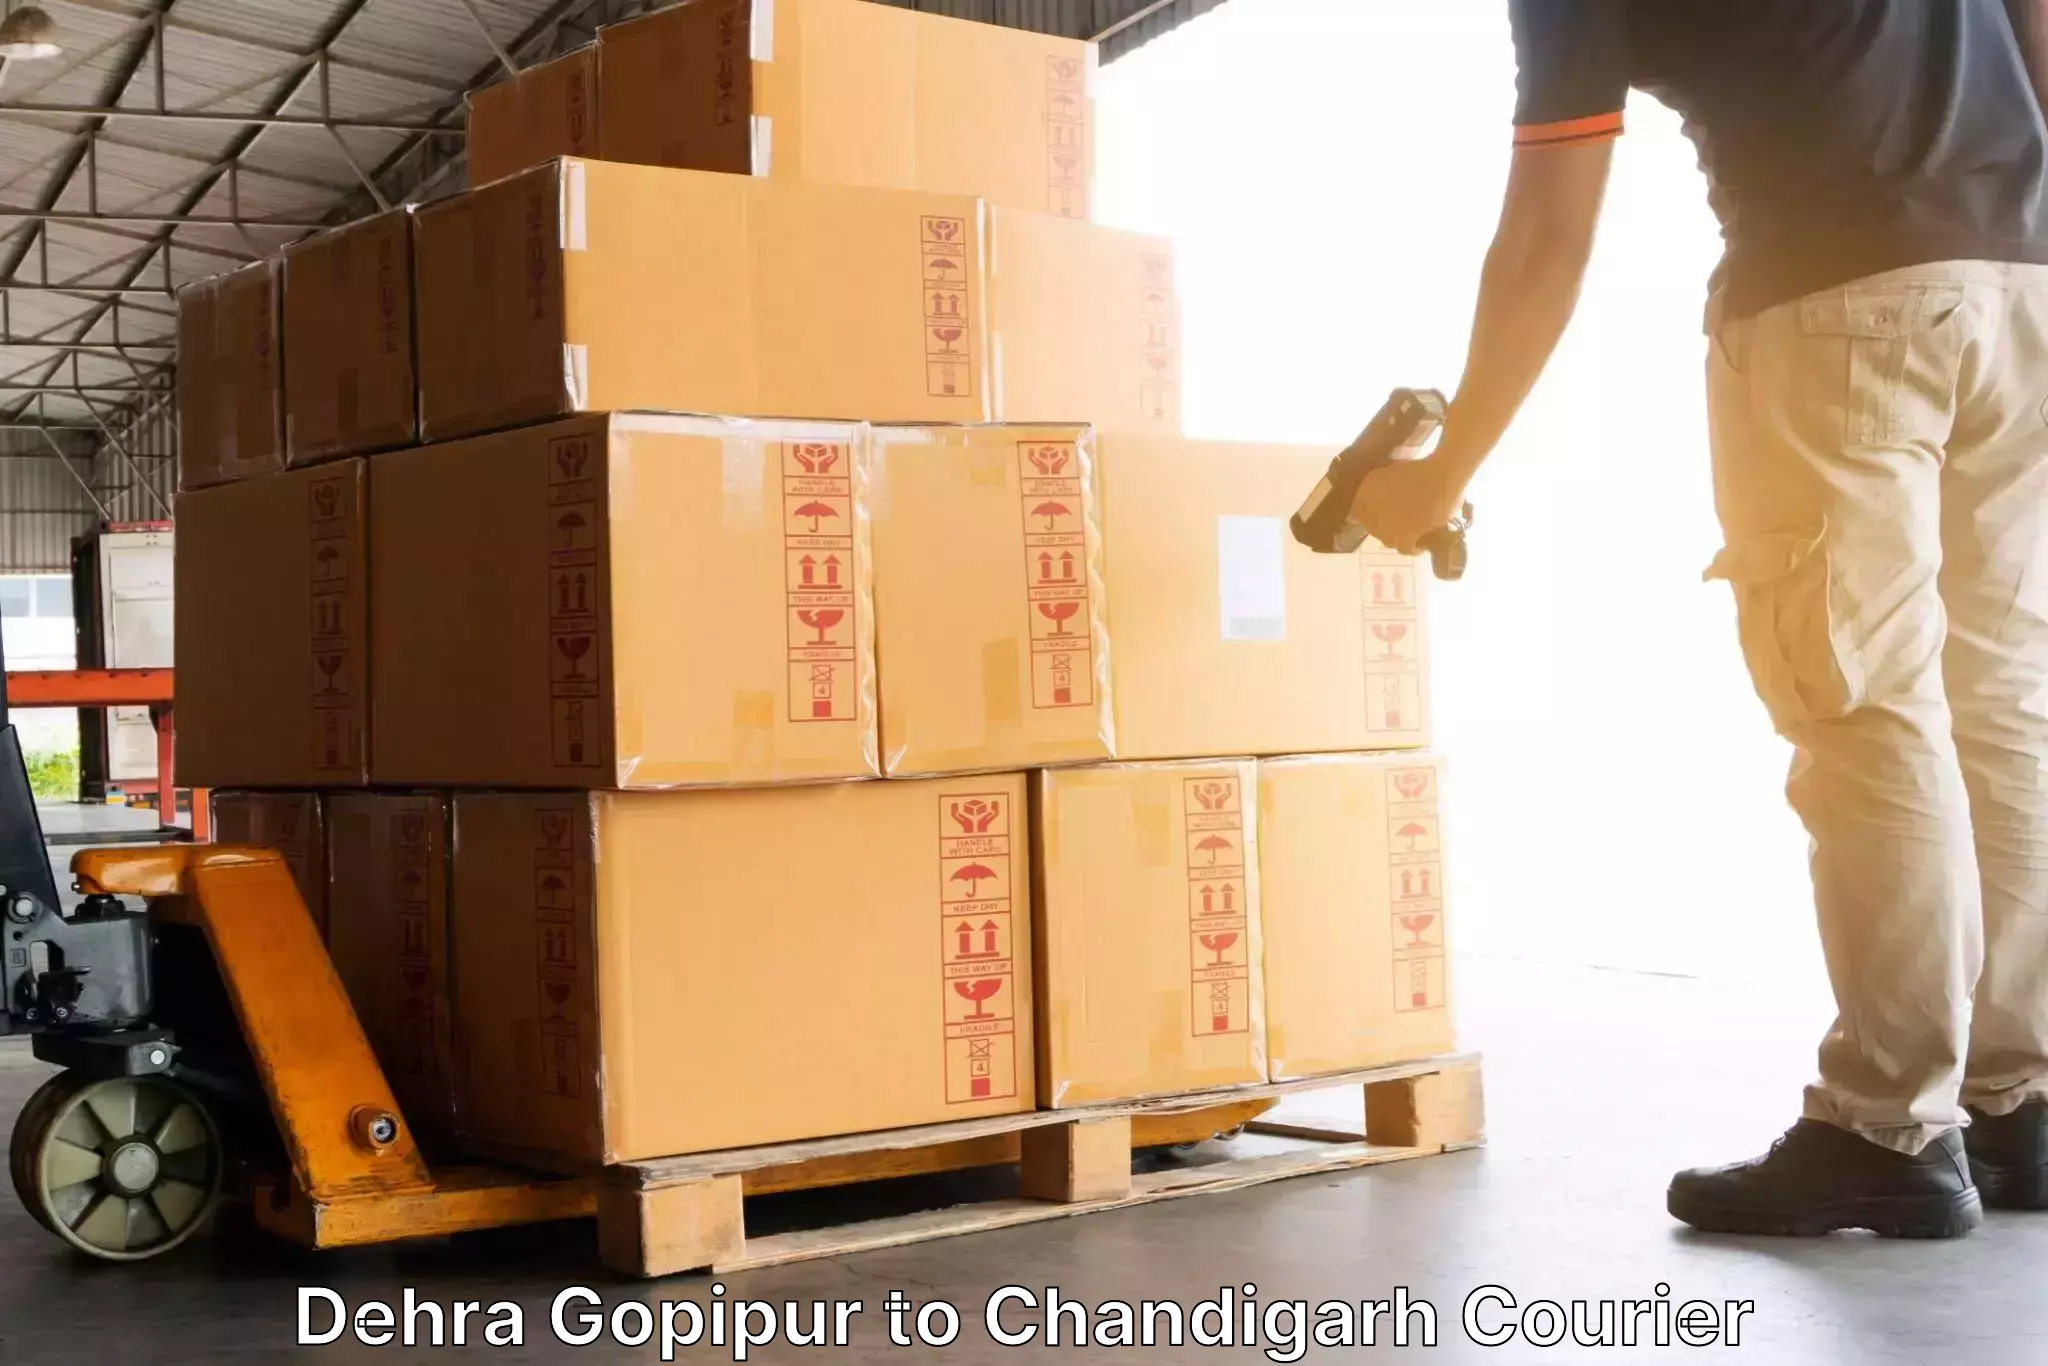 Modern delivery technologies Dehra Gopipur to Chandigarh